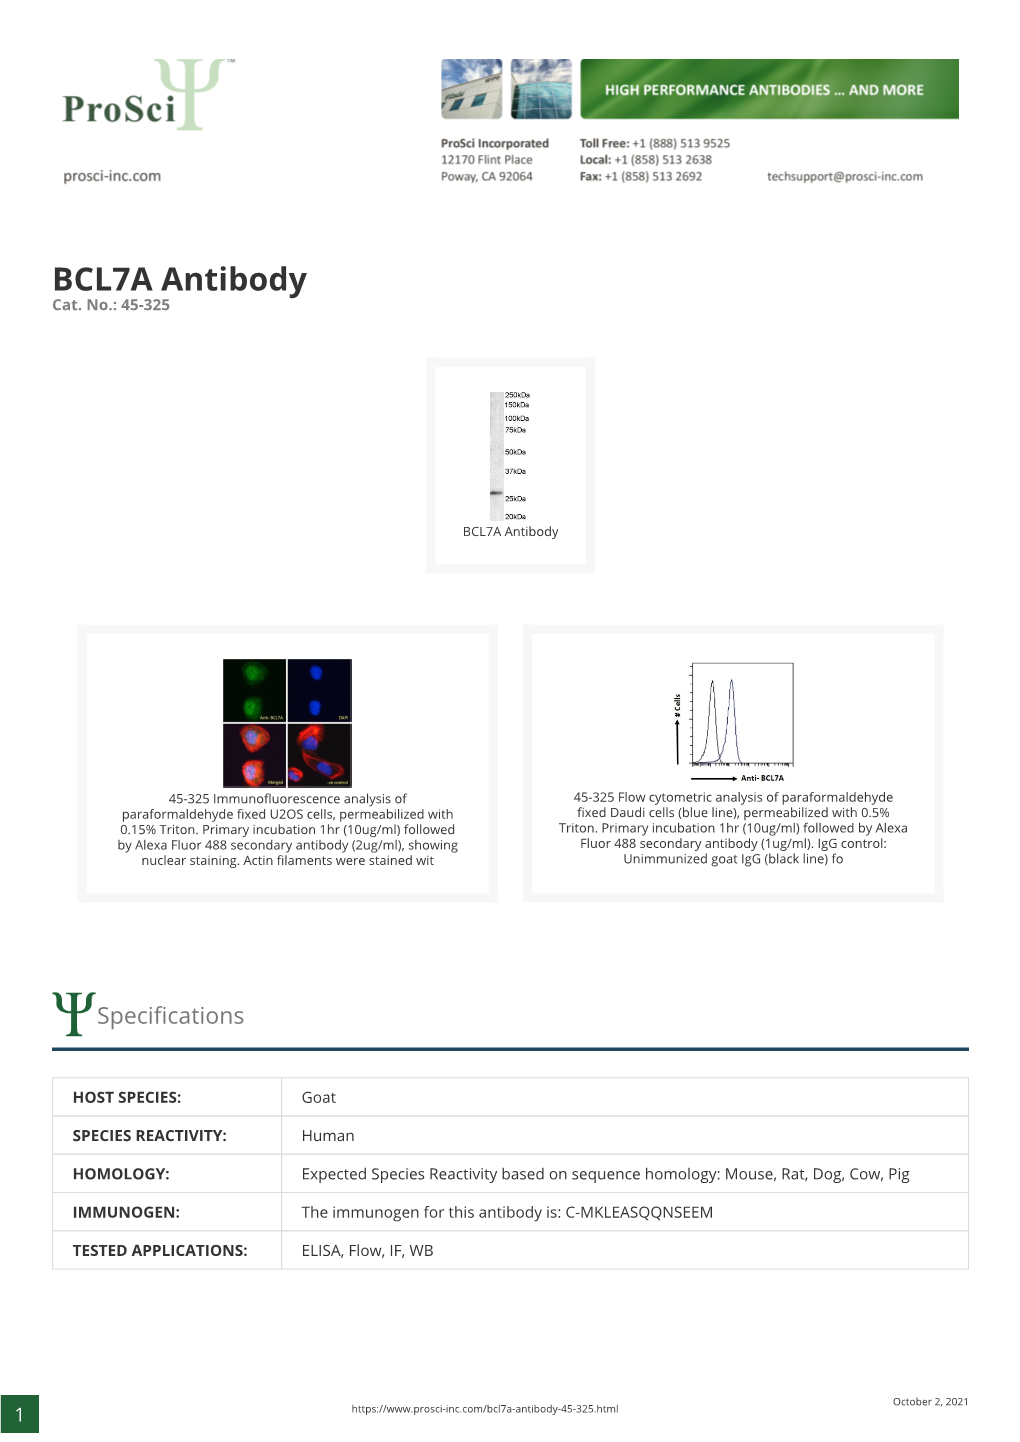 BCL7A Antibody Cat